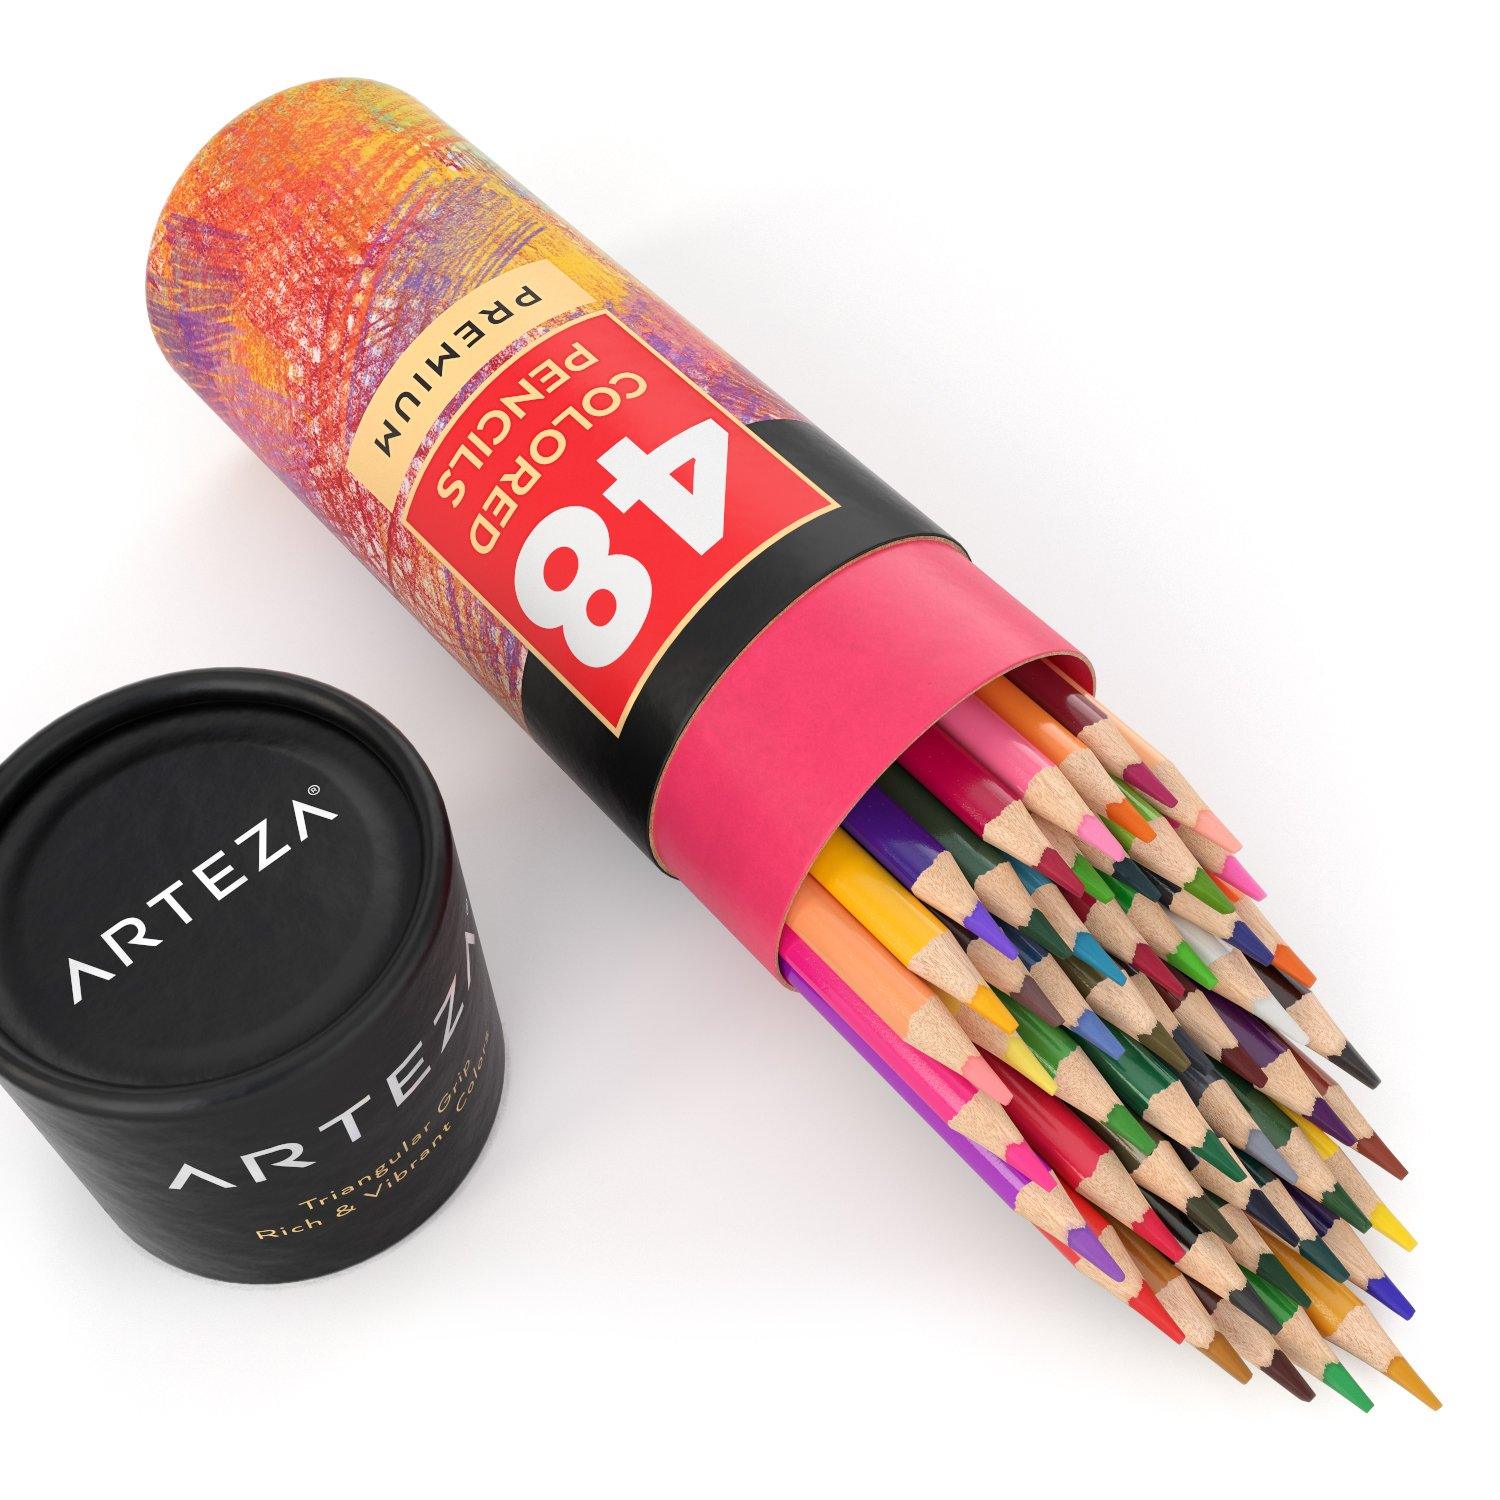 Set 48 Lápices Profesionales Colores Dibujo Arteza Premium